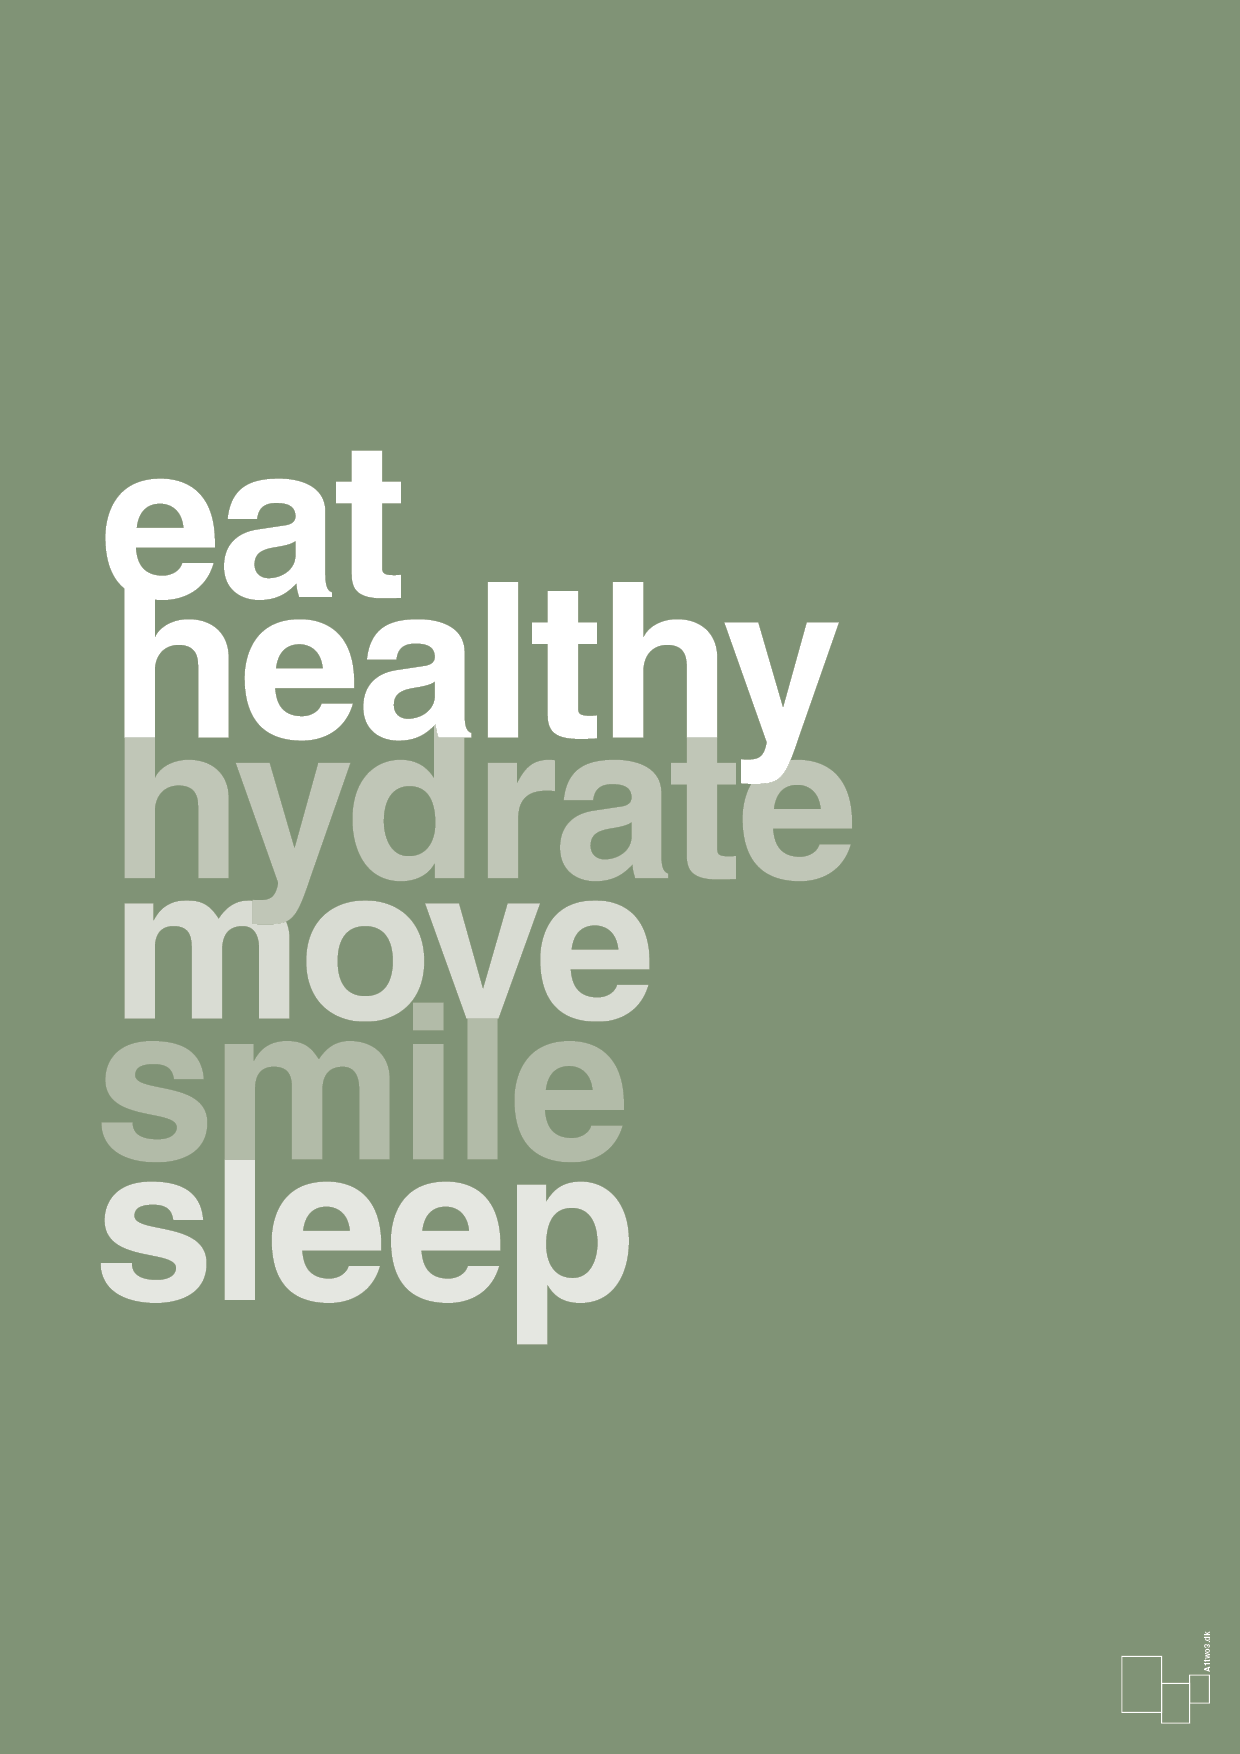 eat healthy hydrate move smile sleep - Plakat med Ordsprog i Jade